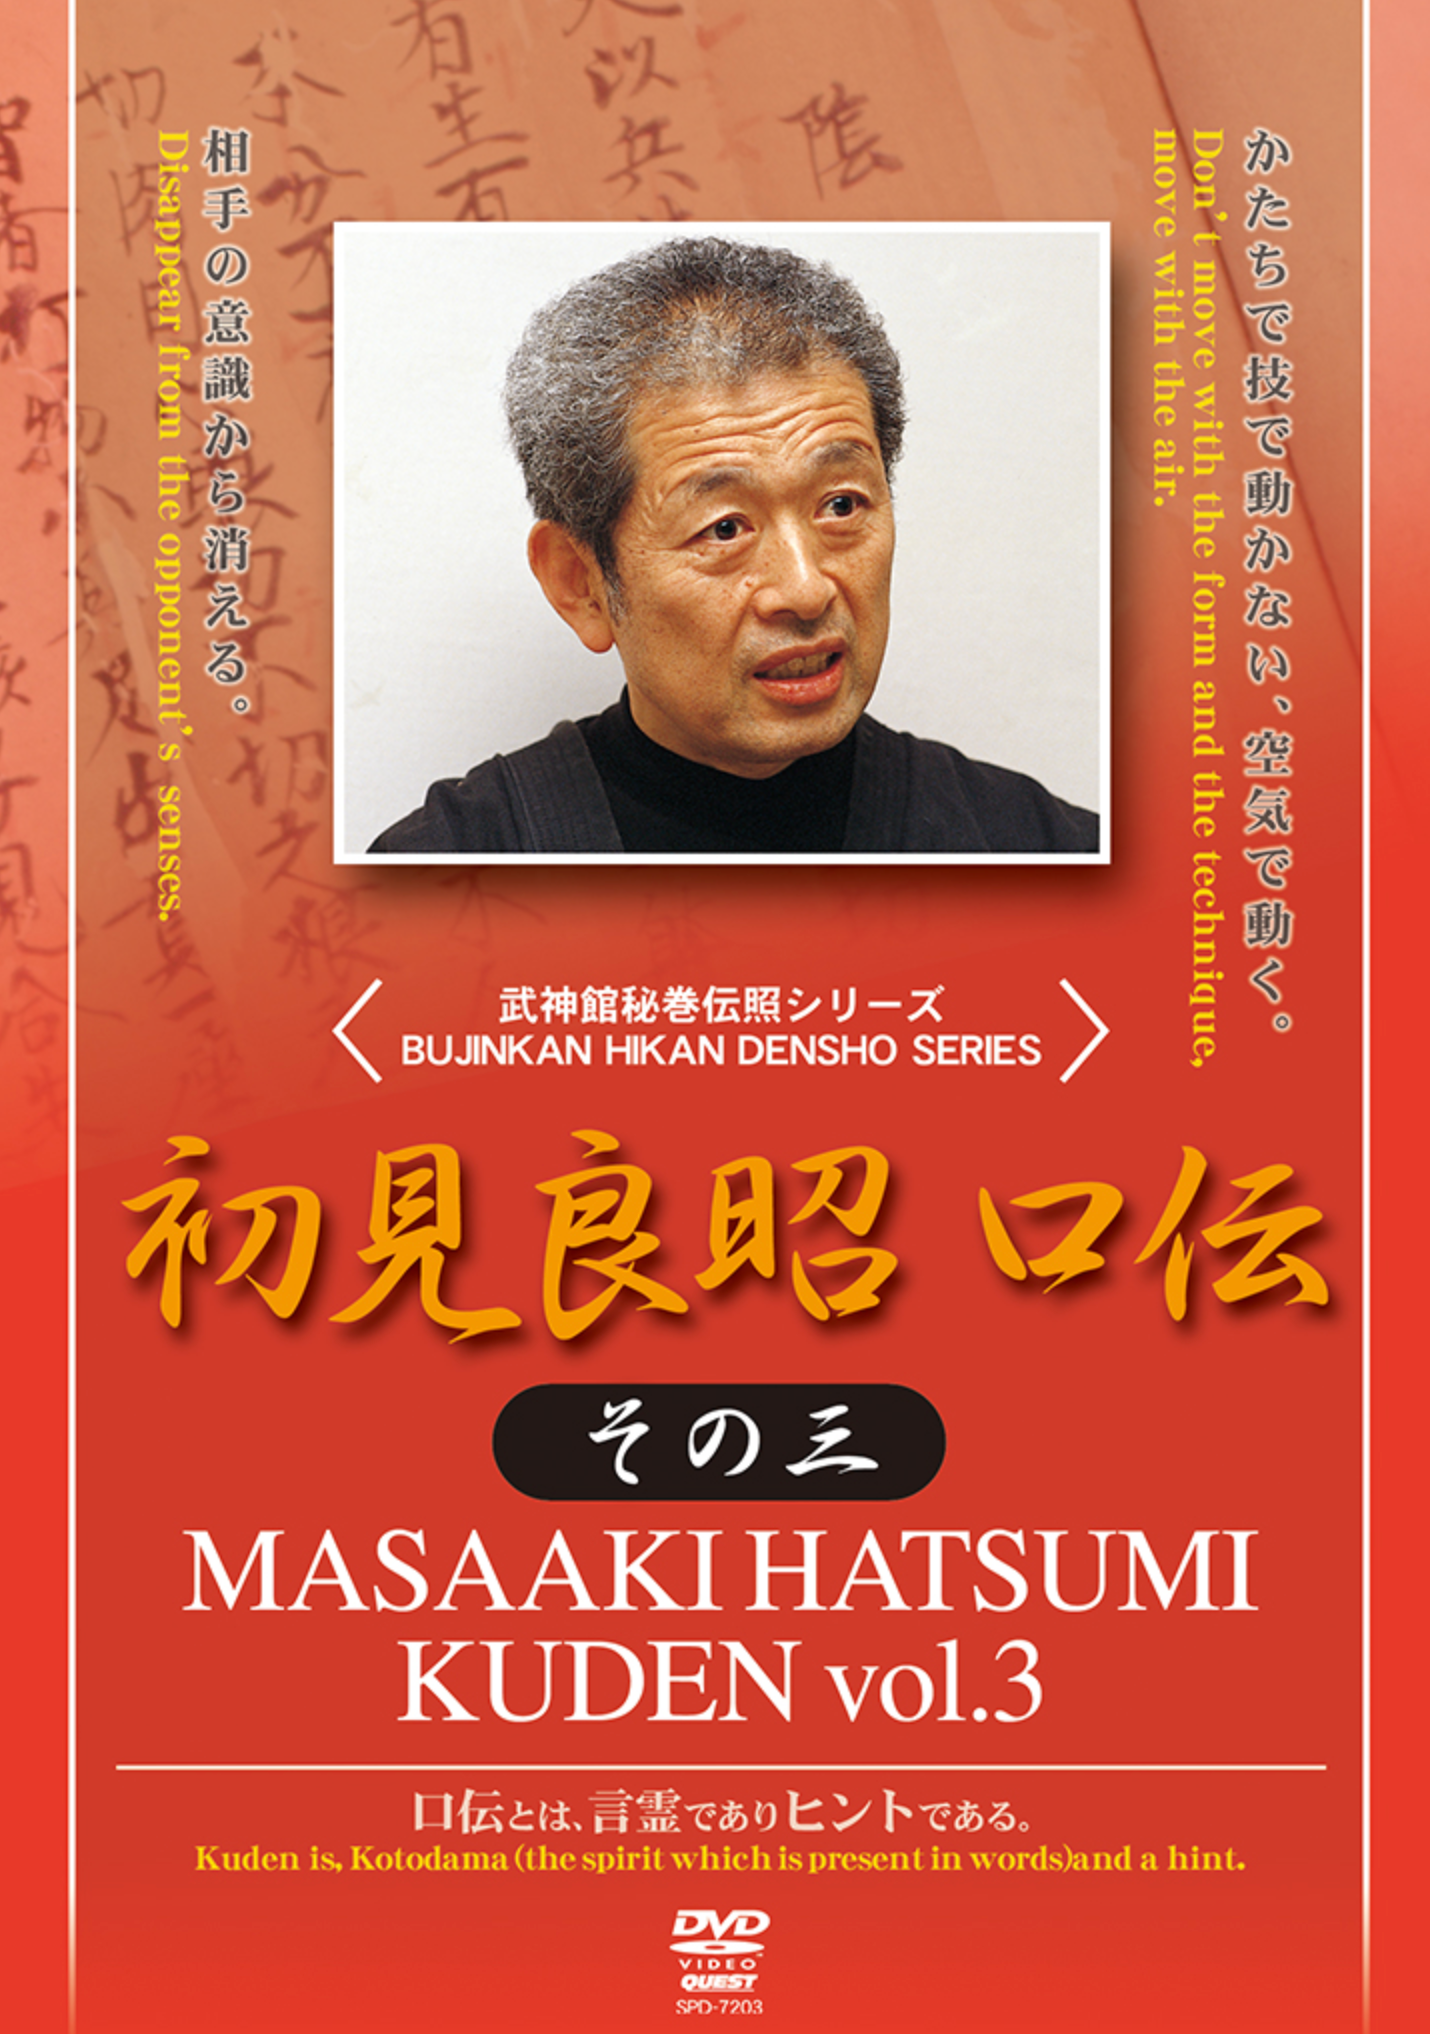 Kuden Vol 3 DVD with Masaaki Hatsumi - Budovideos Inc